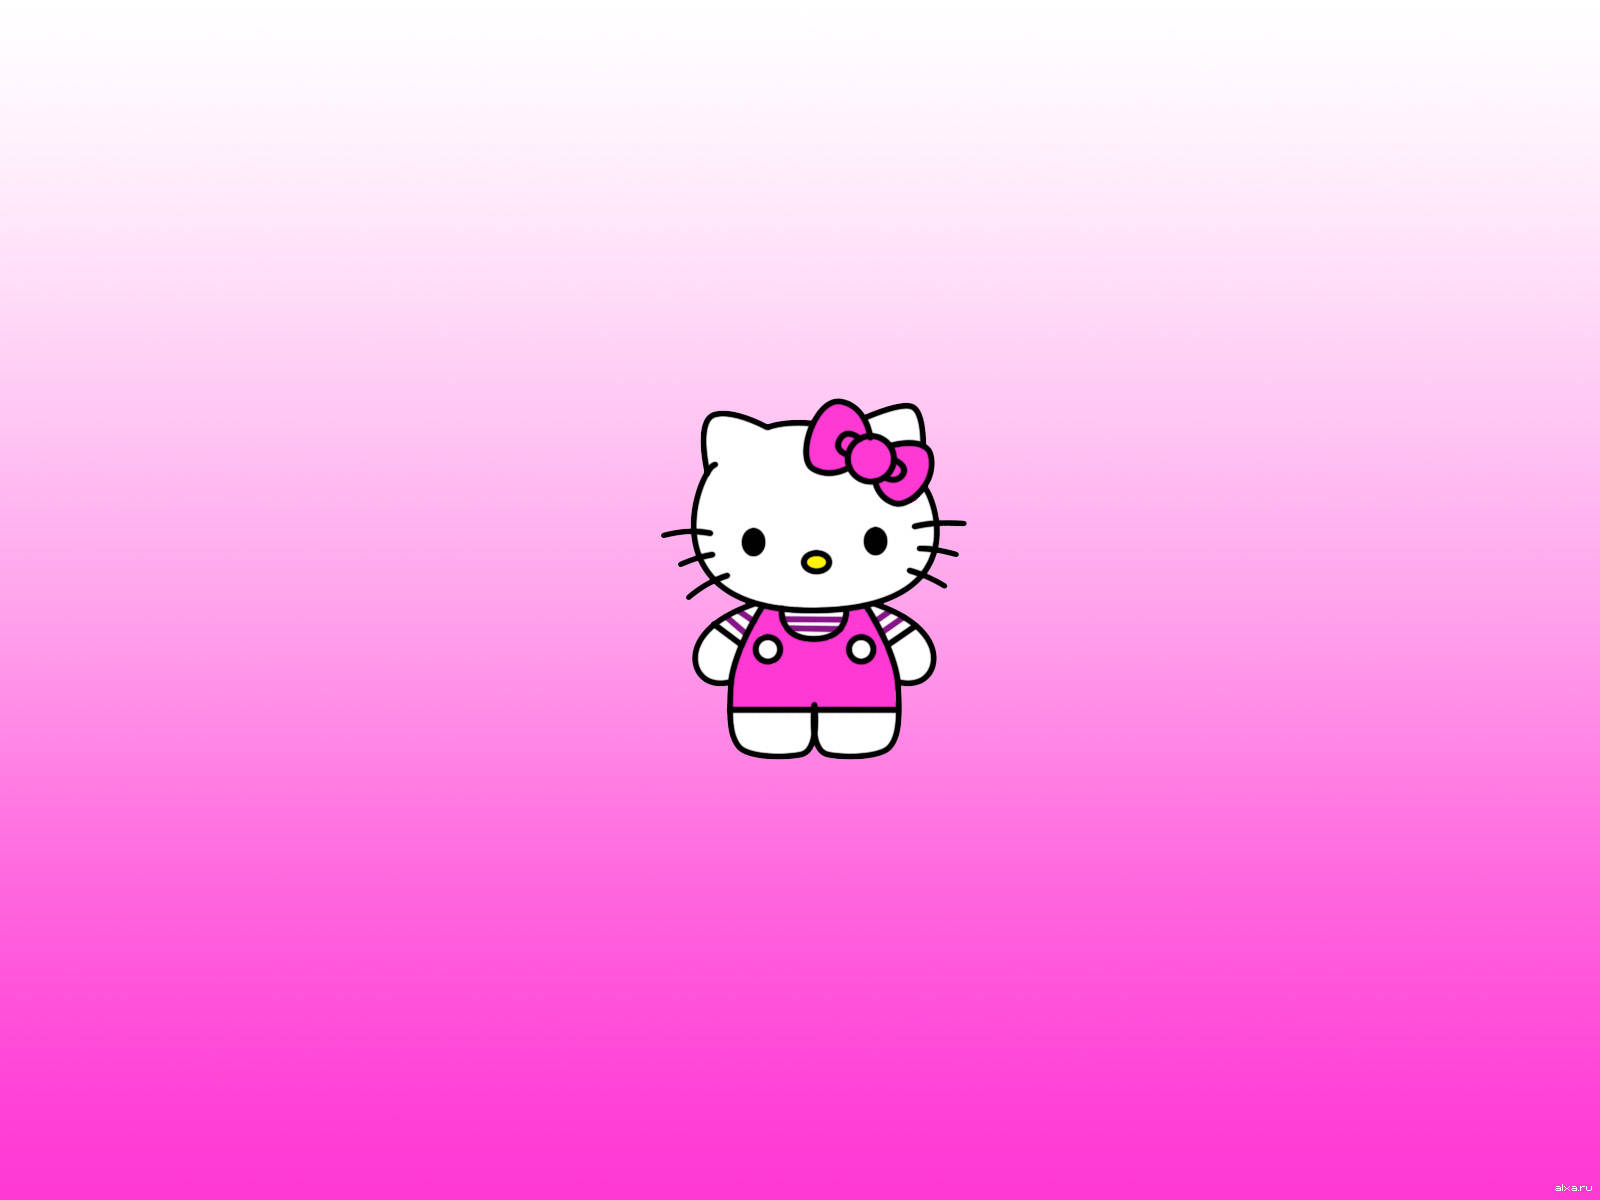 Sanriodesktop Hallo Kitty Verlauf Rosa Wallpaper